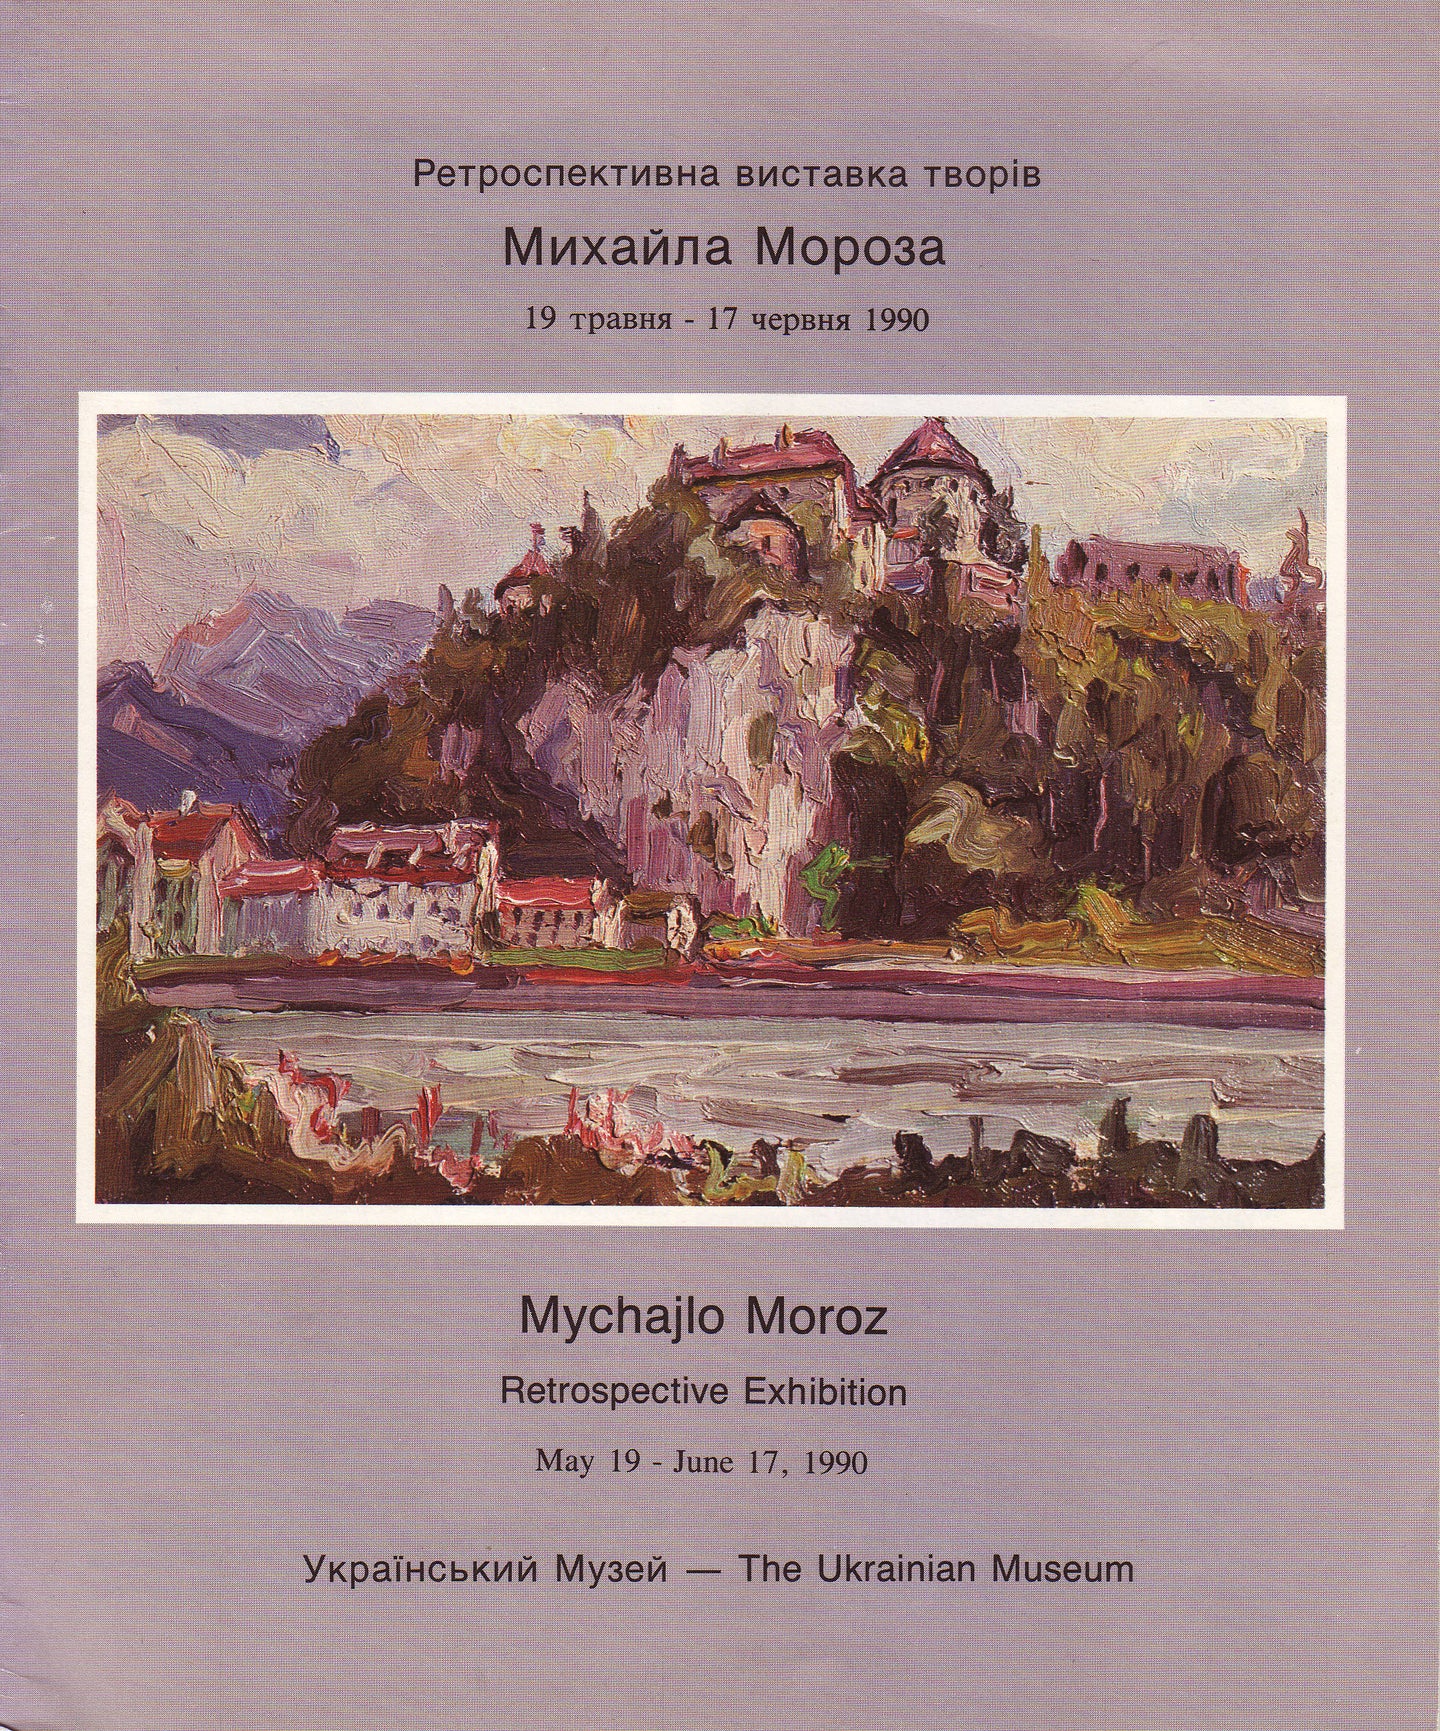 Mychajlo Moroz: Retrospective Exhibition